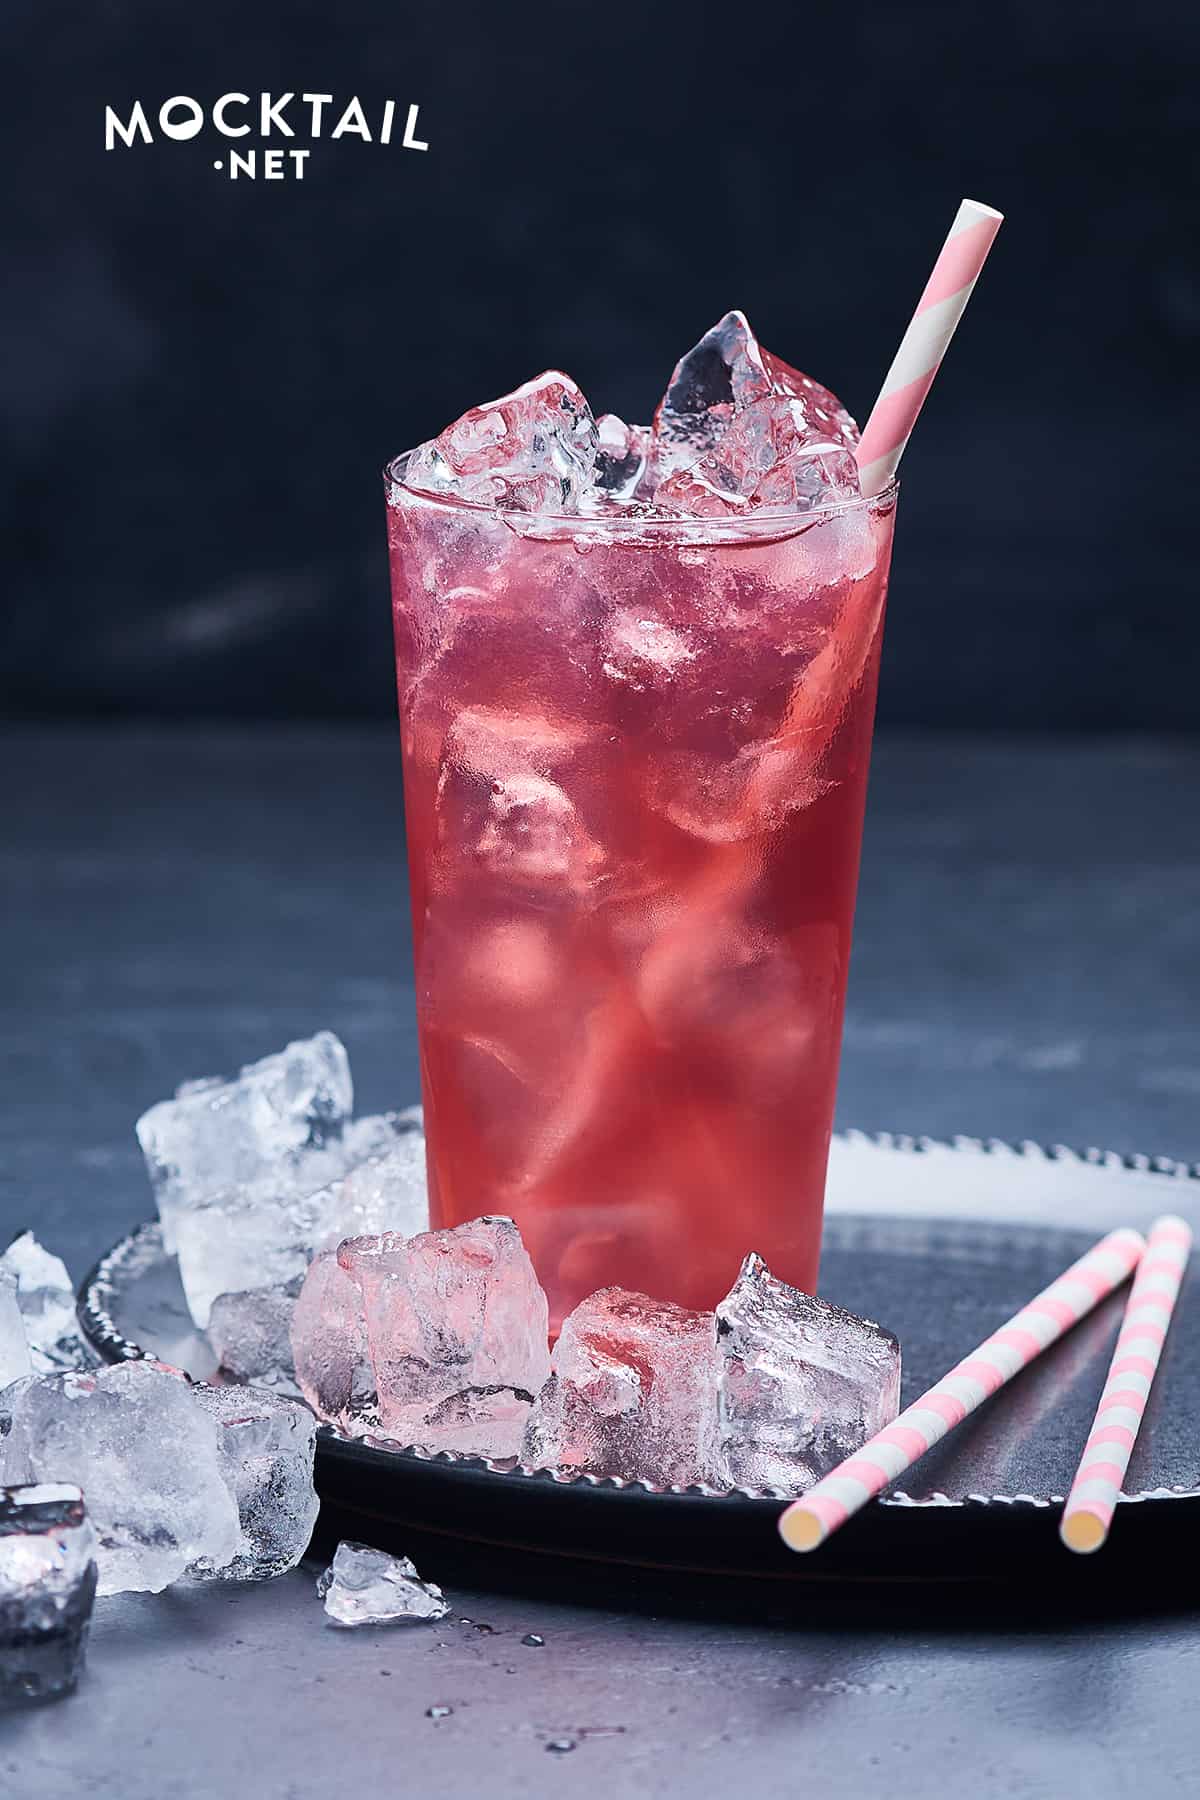 Pink Monster Drink - Homemade Recipe